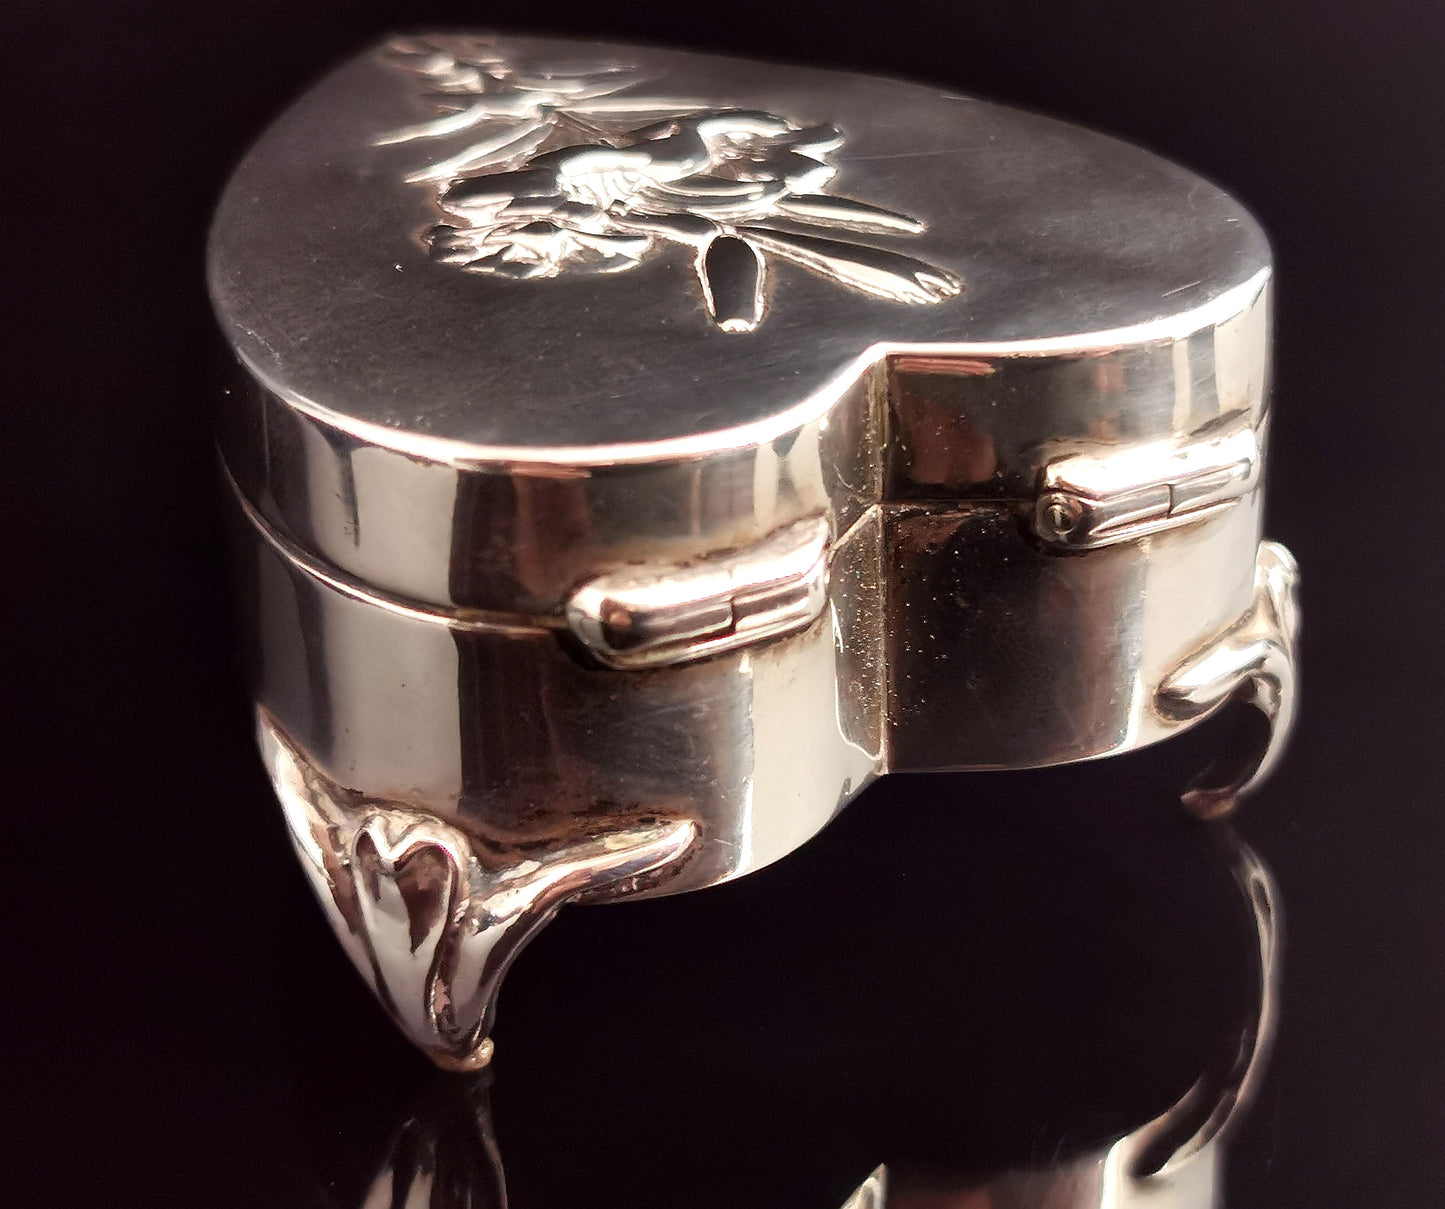 Antique Silver heart shaped jewellery box, Art Nouveau